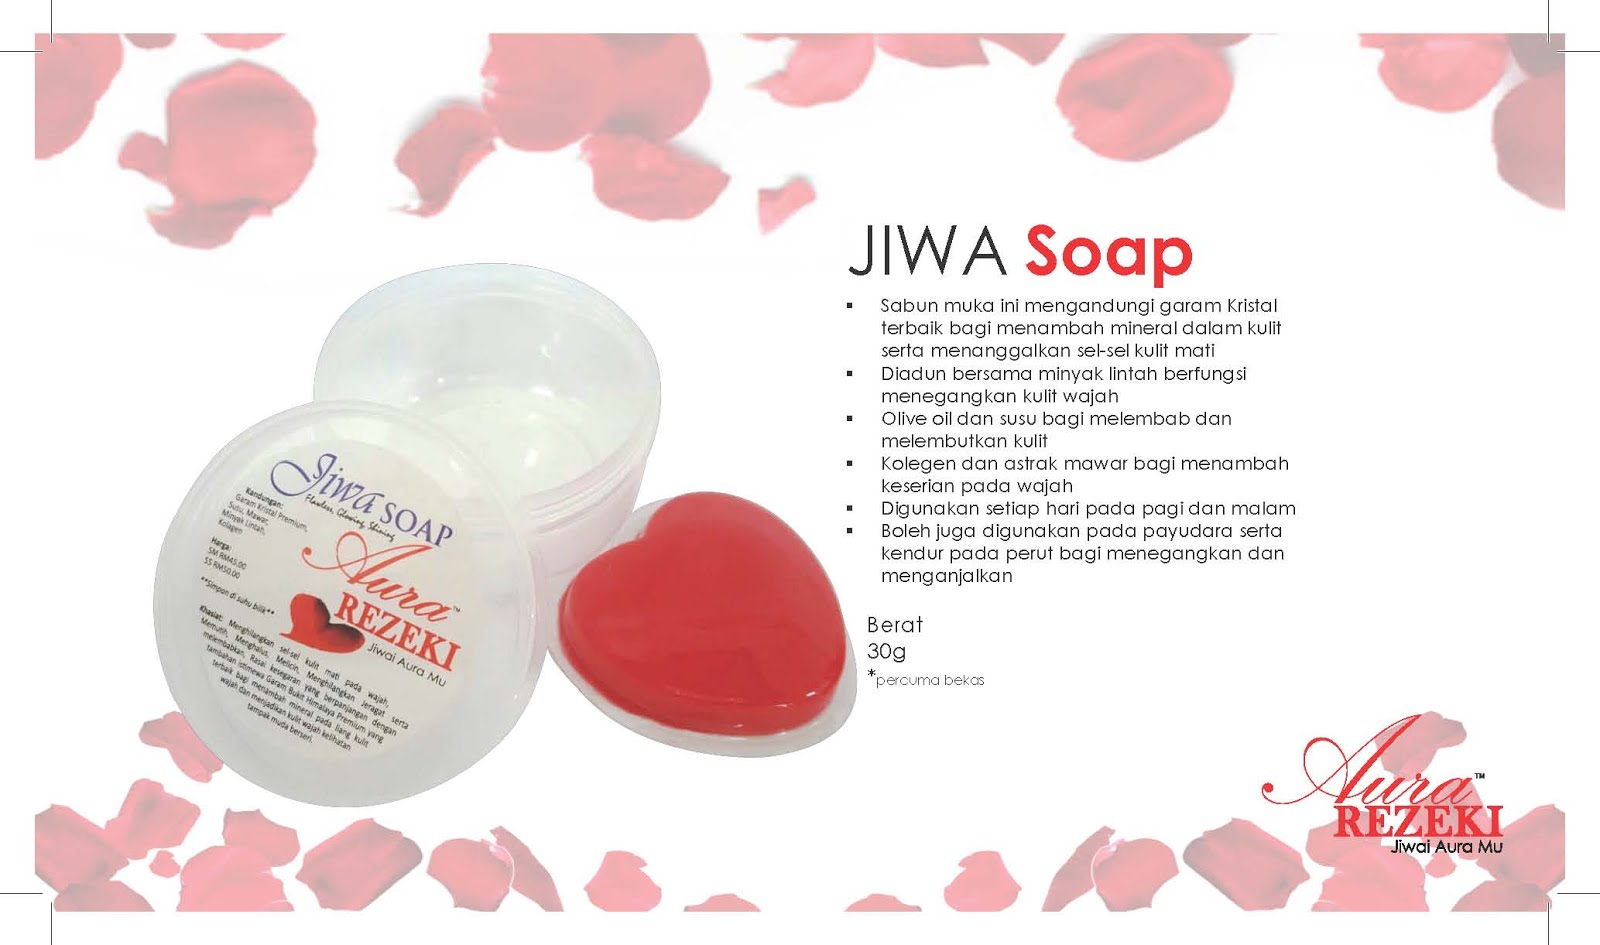 JIWA SOAP